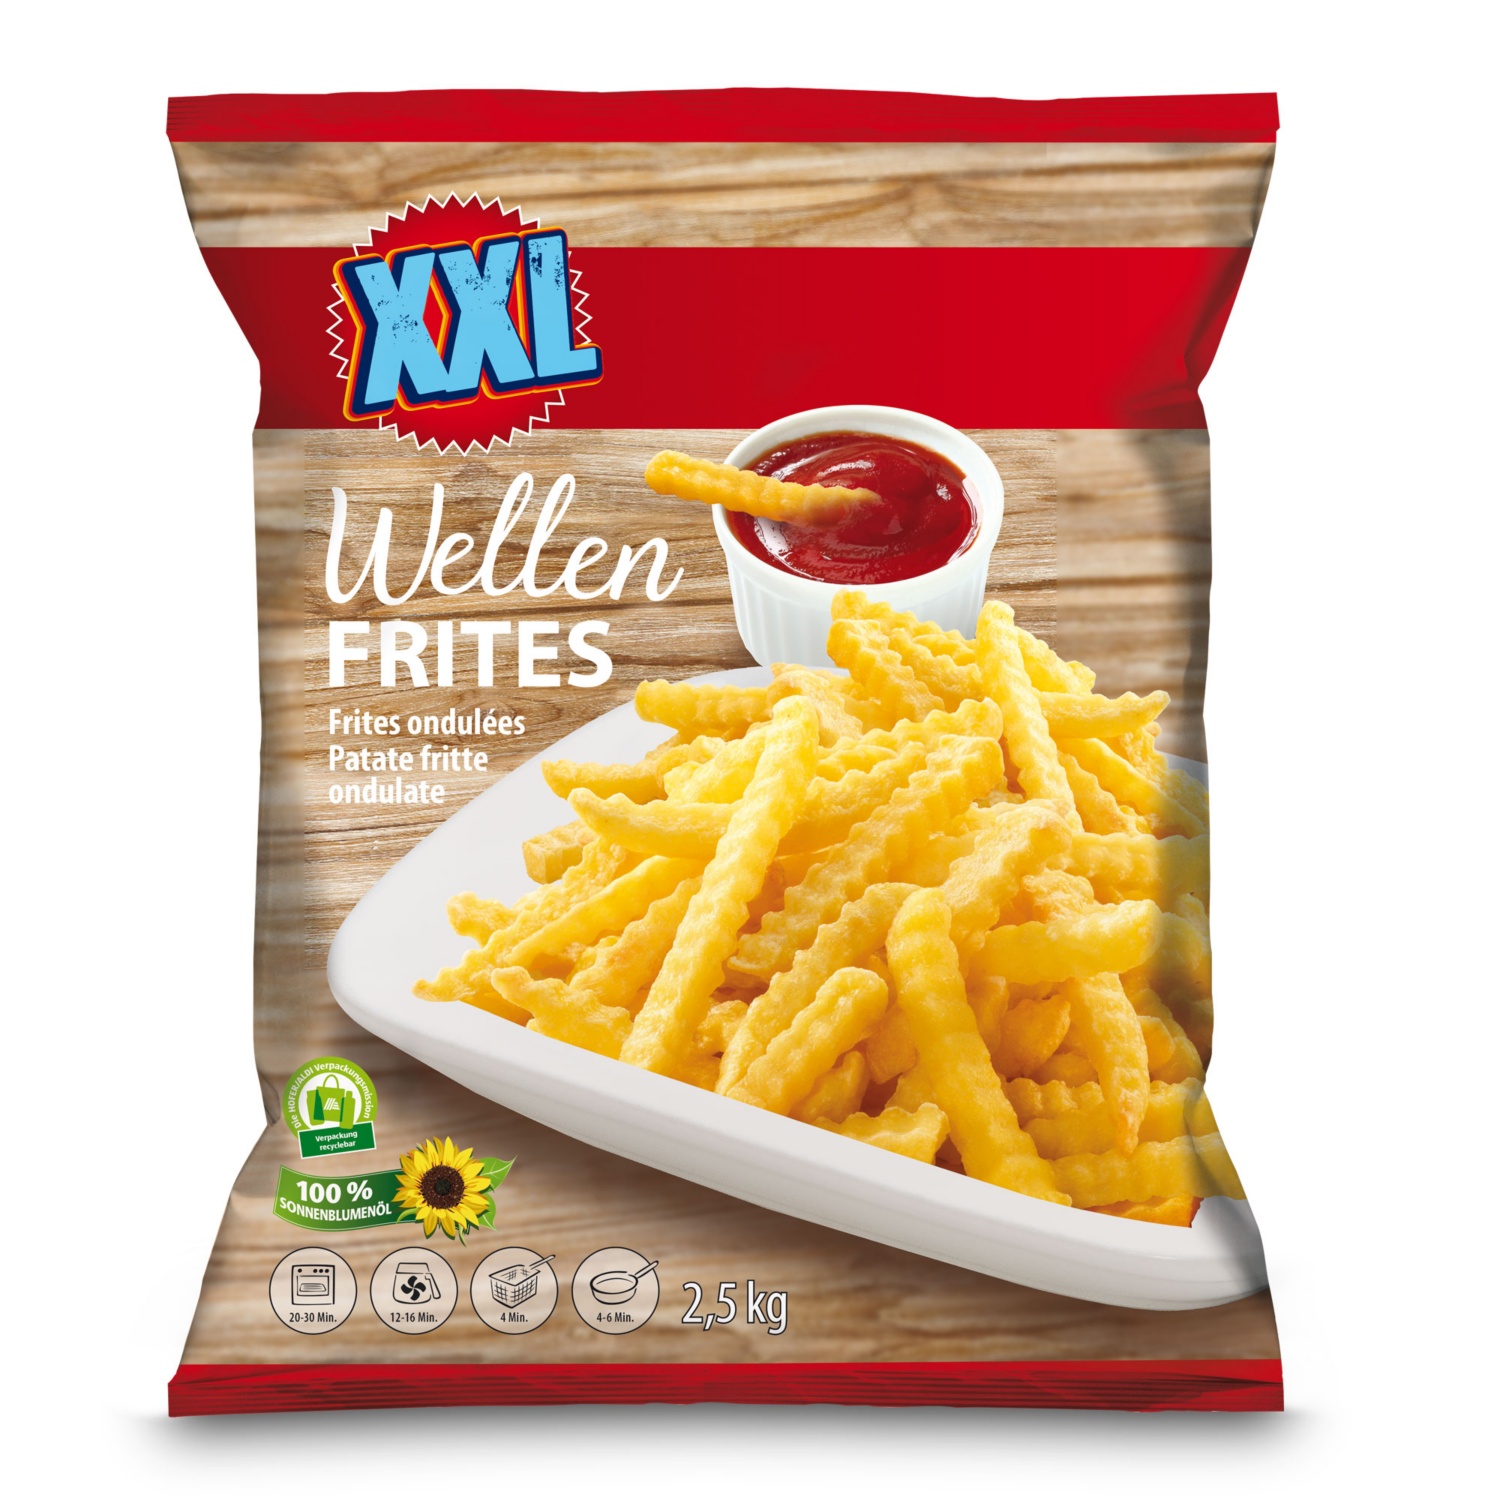 XXL Wellen Frites